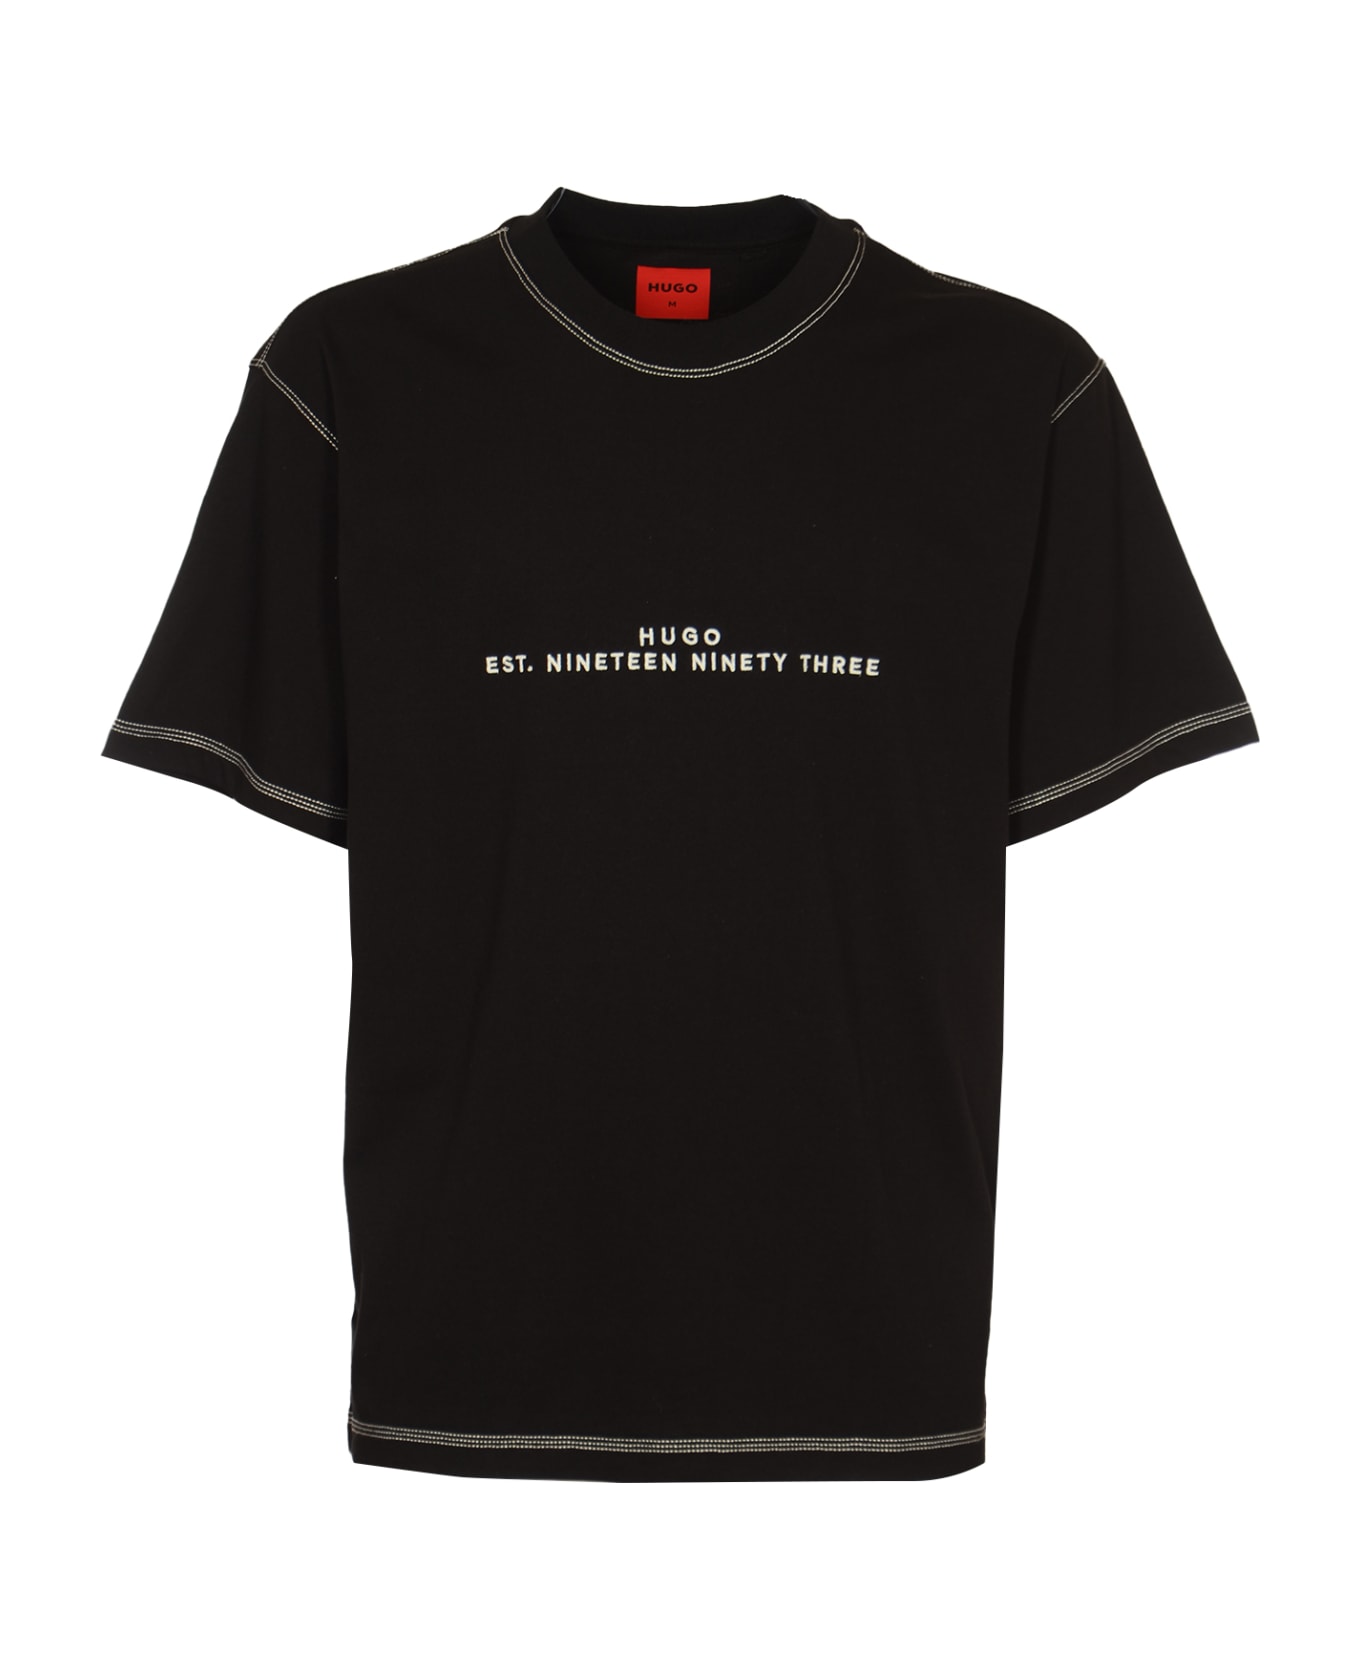 Hugo Boss Nineteen Ninety Three T-shirt - Black